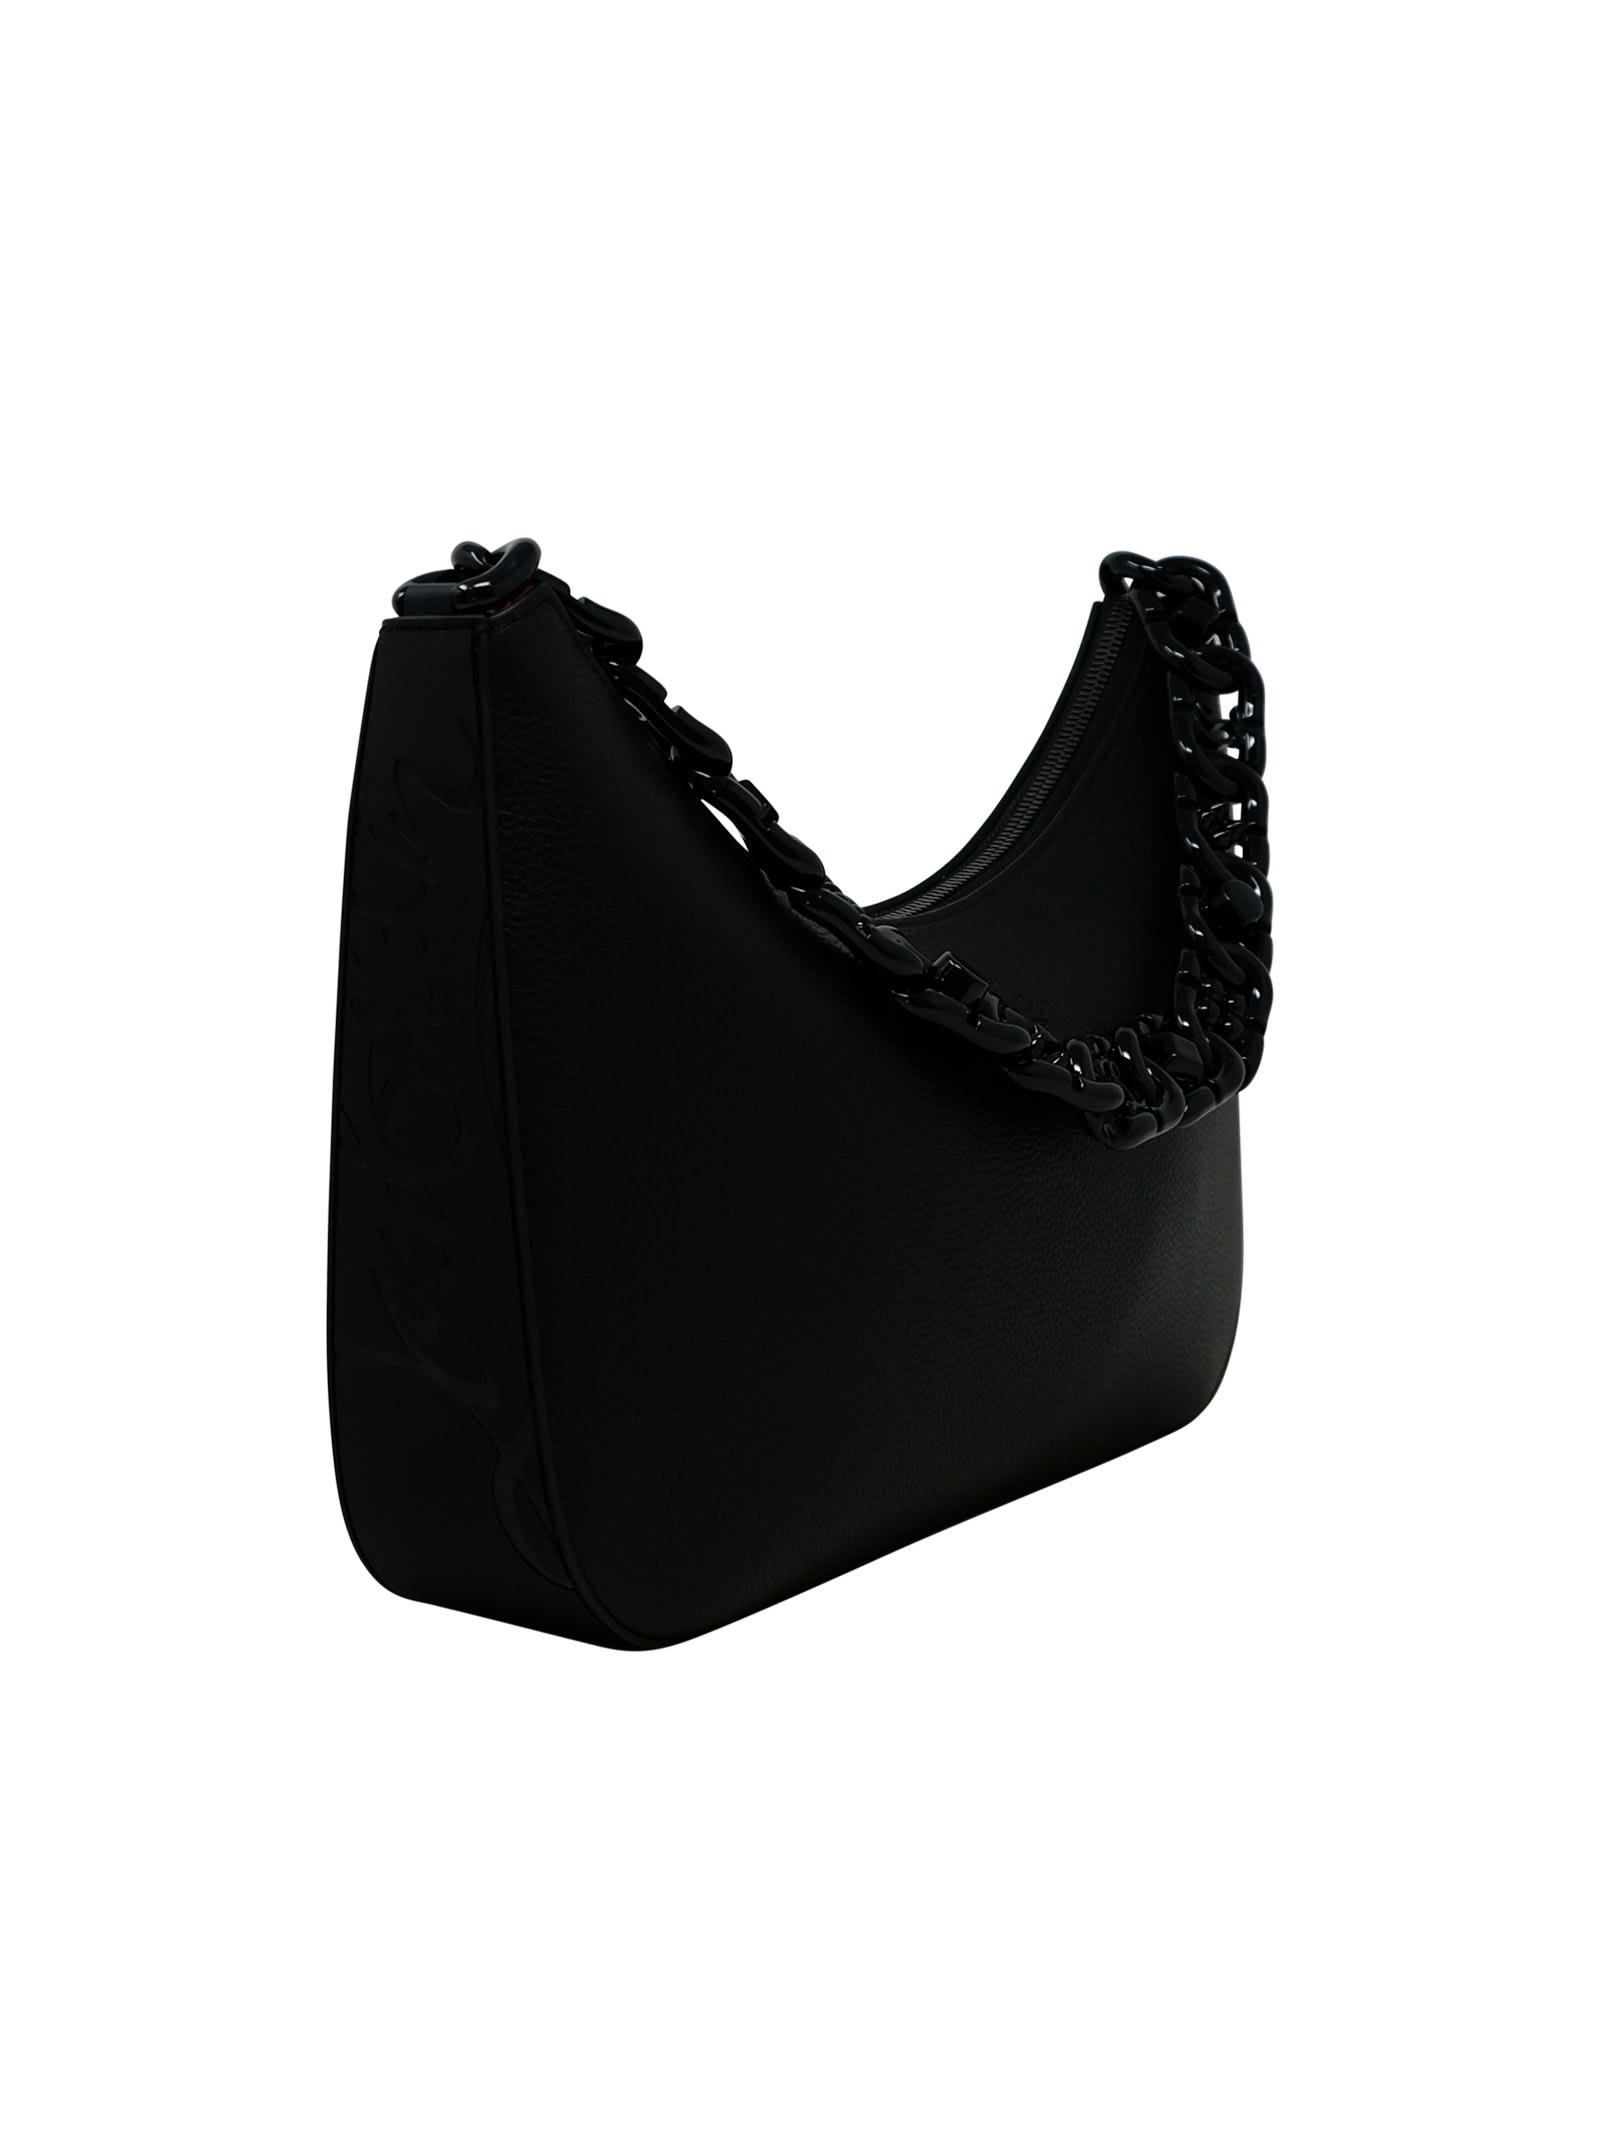 Shop Christian Louboutin Black Leather Large Chain Loubila Handbag